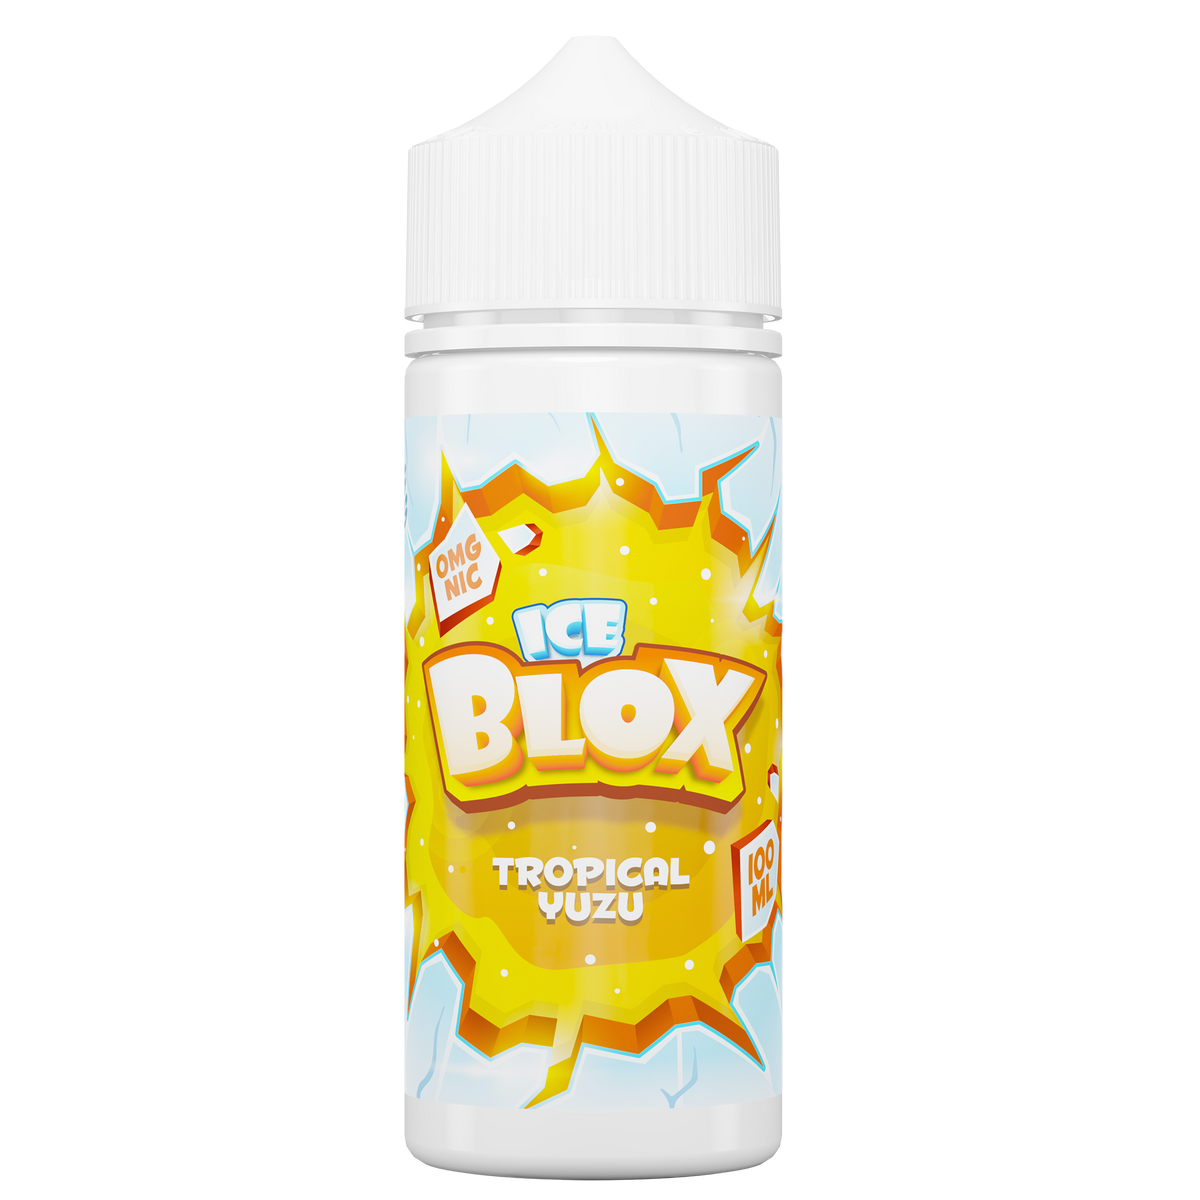 Tropical Yuzu E-Liquid by Ice Blox - Shortfills UK